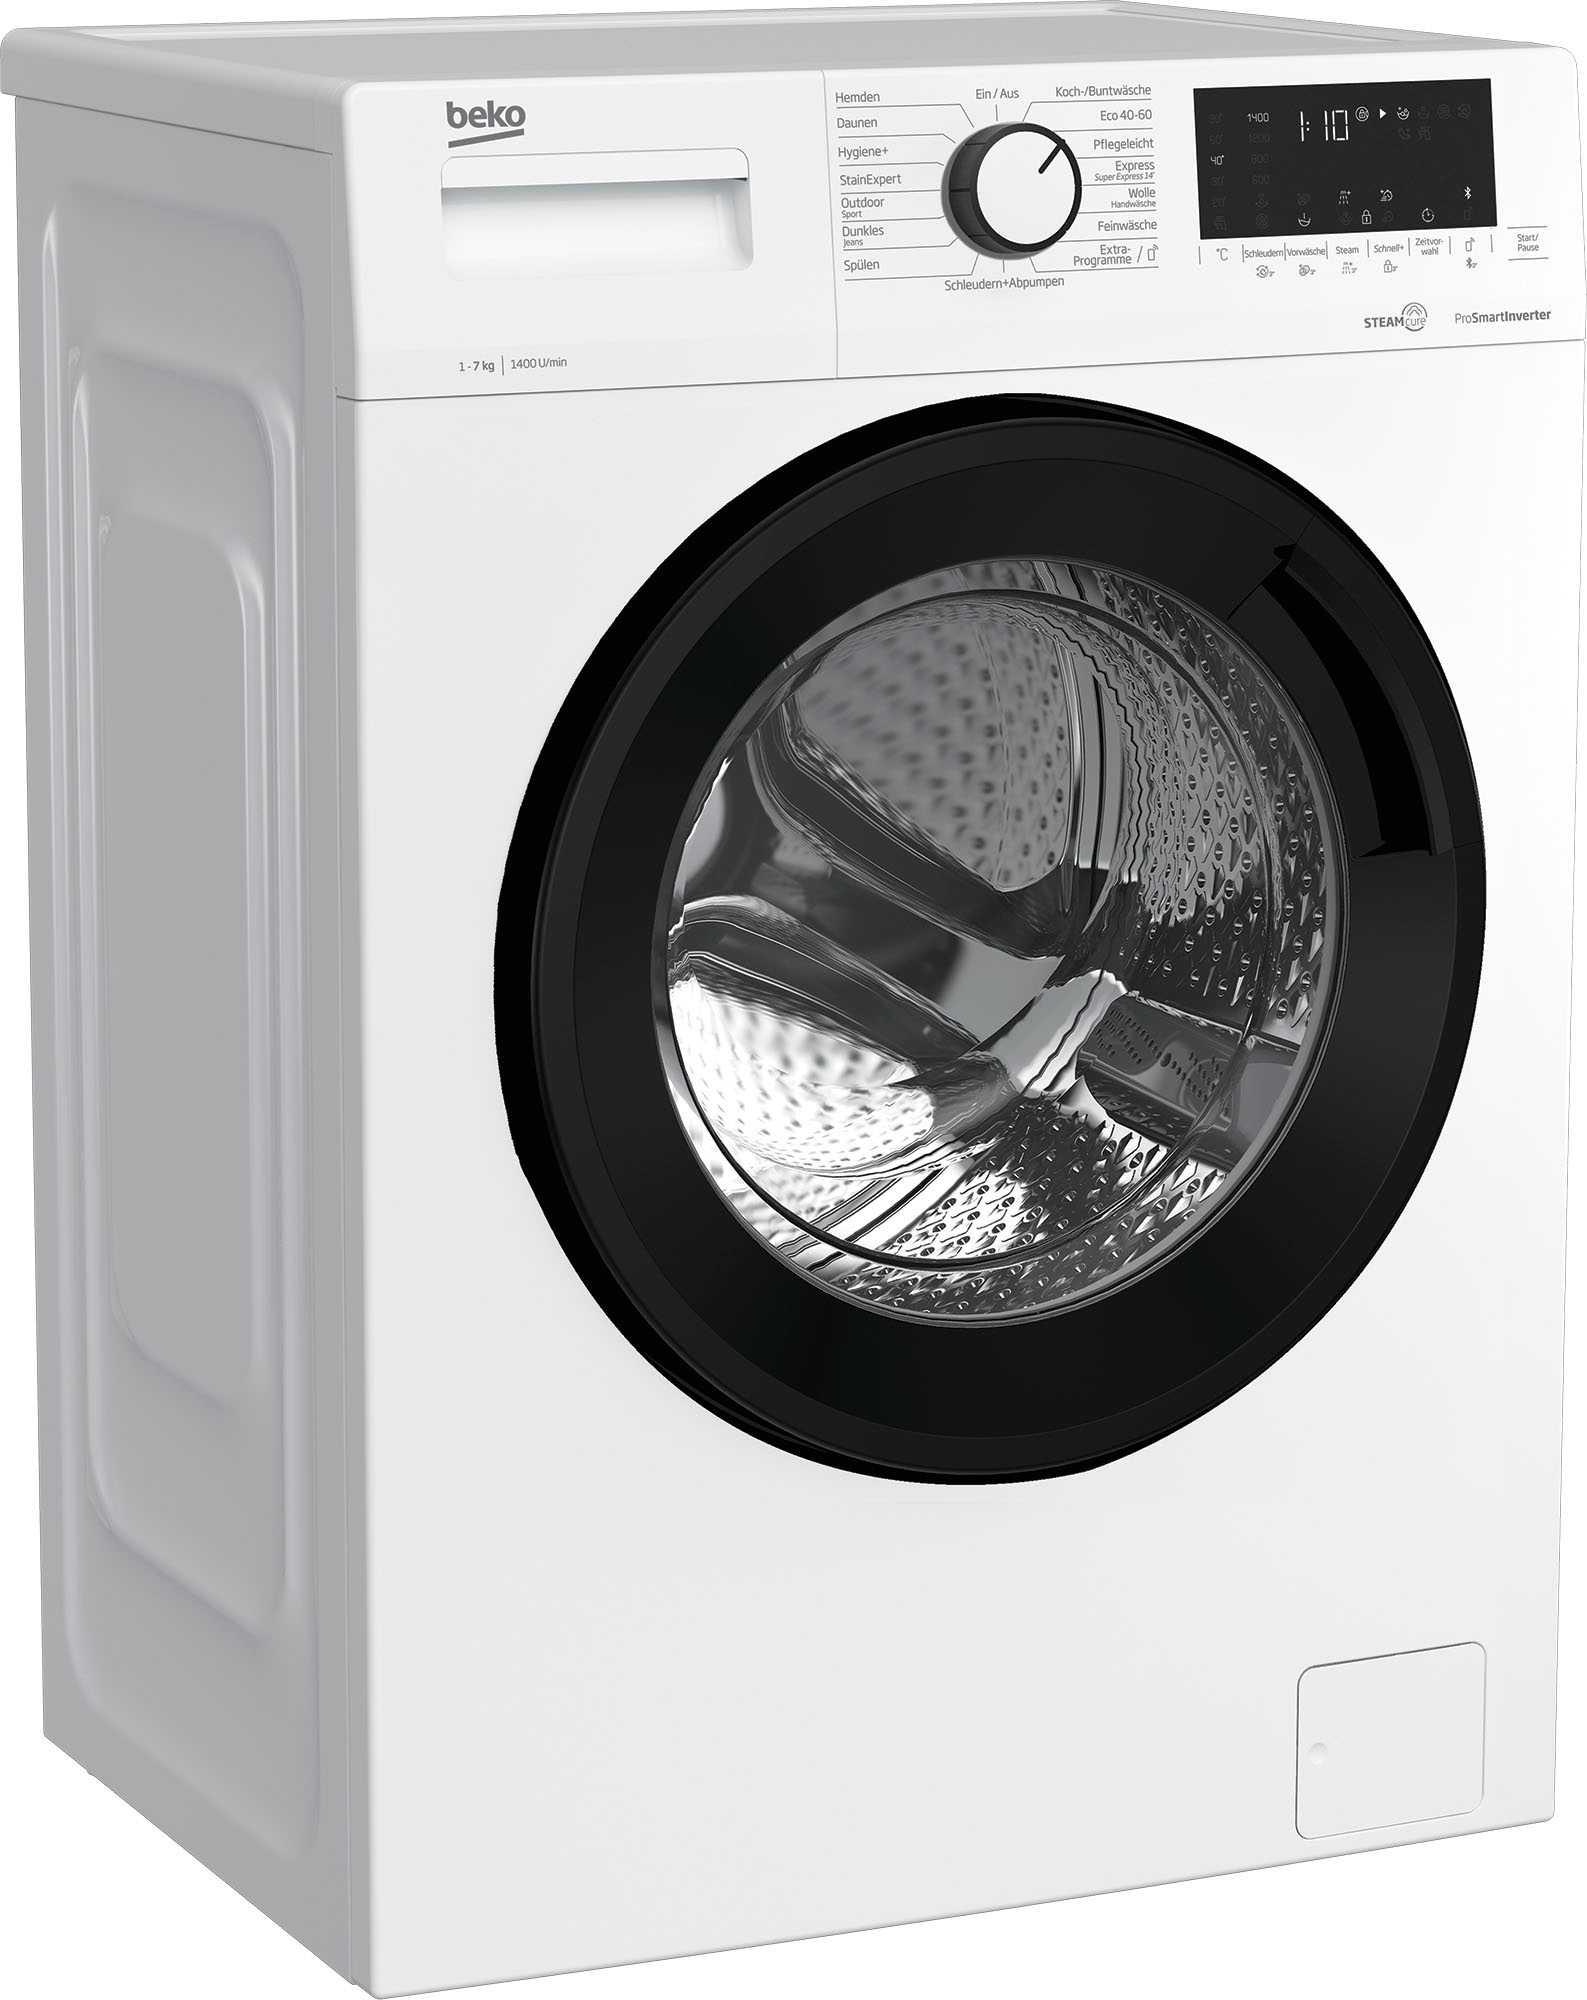 BEKO Waschmaschine »WMO822A«, WMO822A 7001440096, 1400 bei kg, 8 U/min online